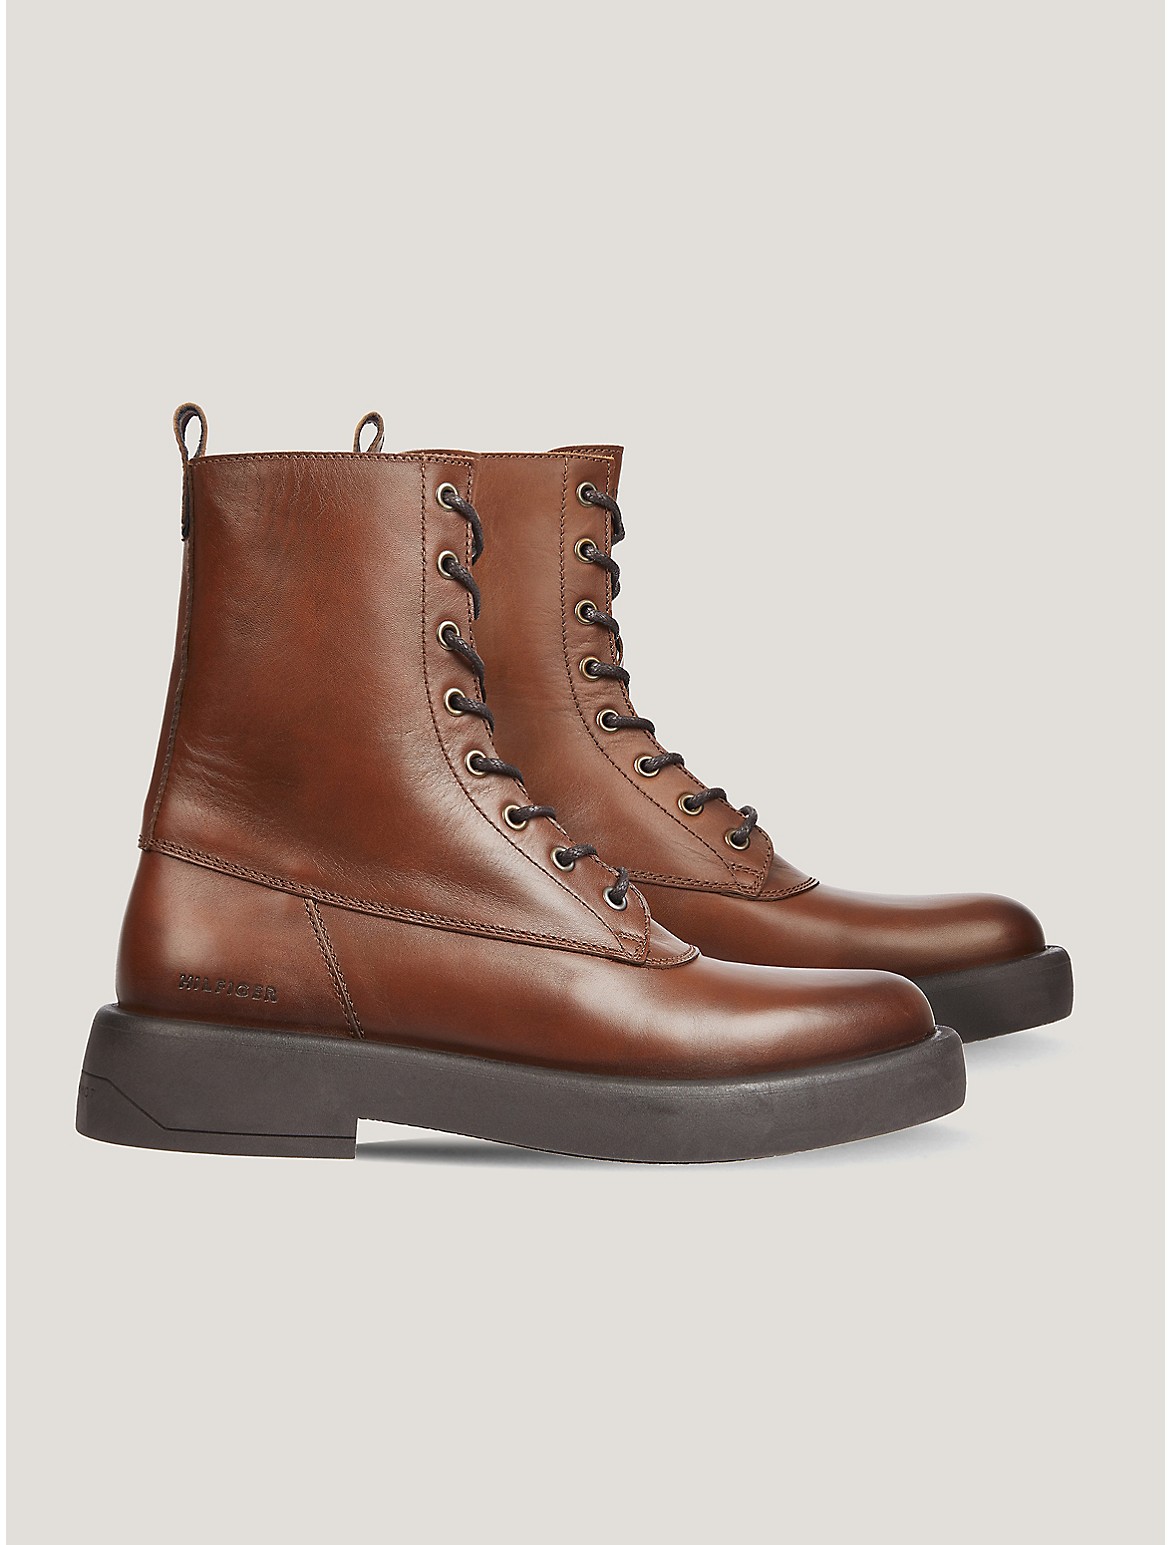 Tommy Hilfiger Men's Cognac Leather Boot - Brown - 12